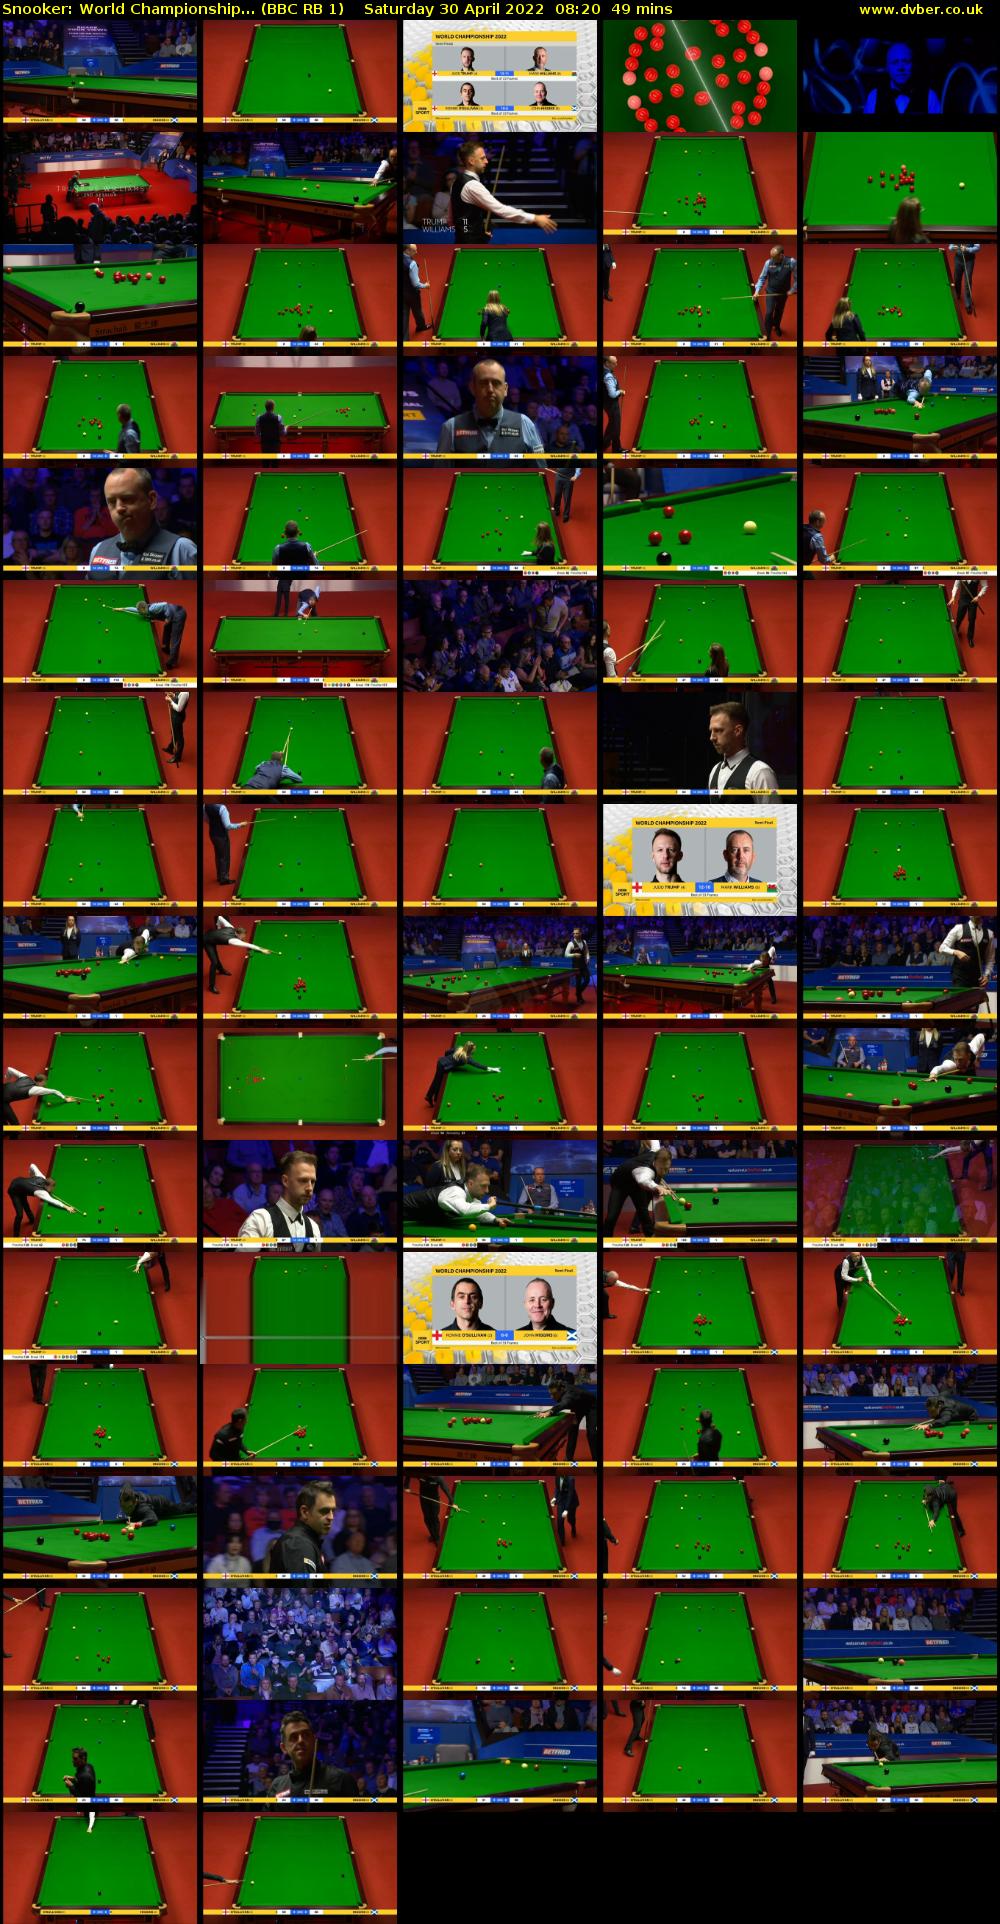 Snooker: World Championship... (BBC RB 1) Saturday 30 April 2022 08:20 - 09:09